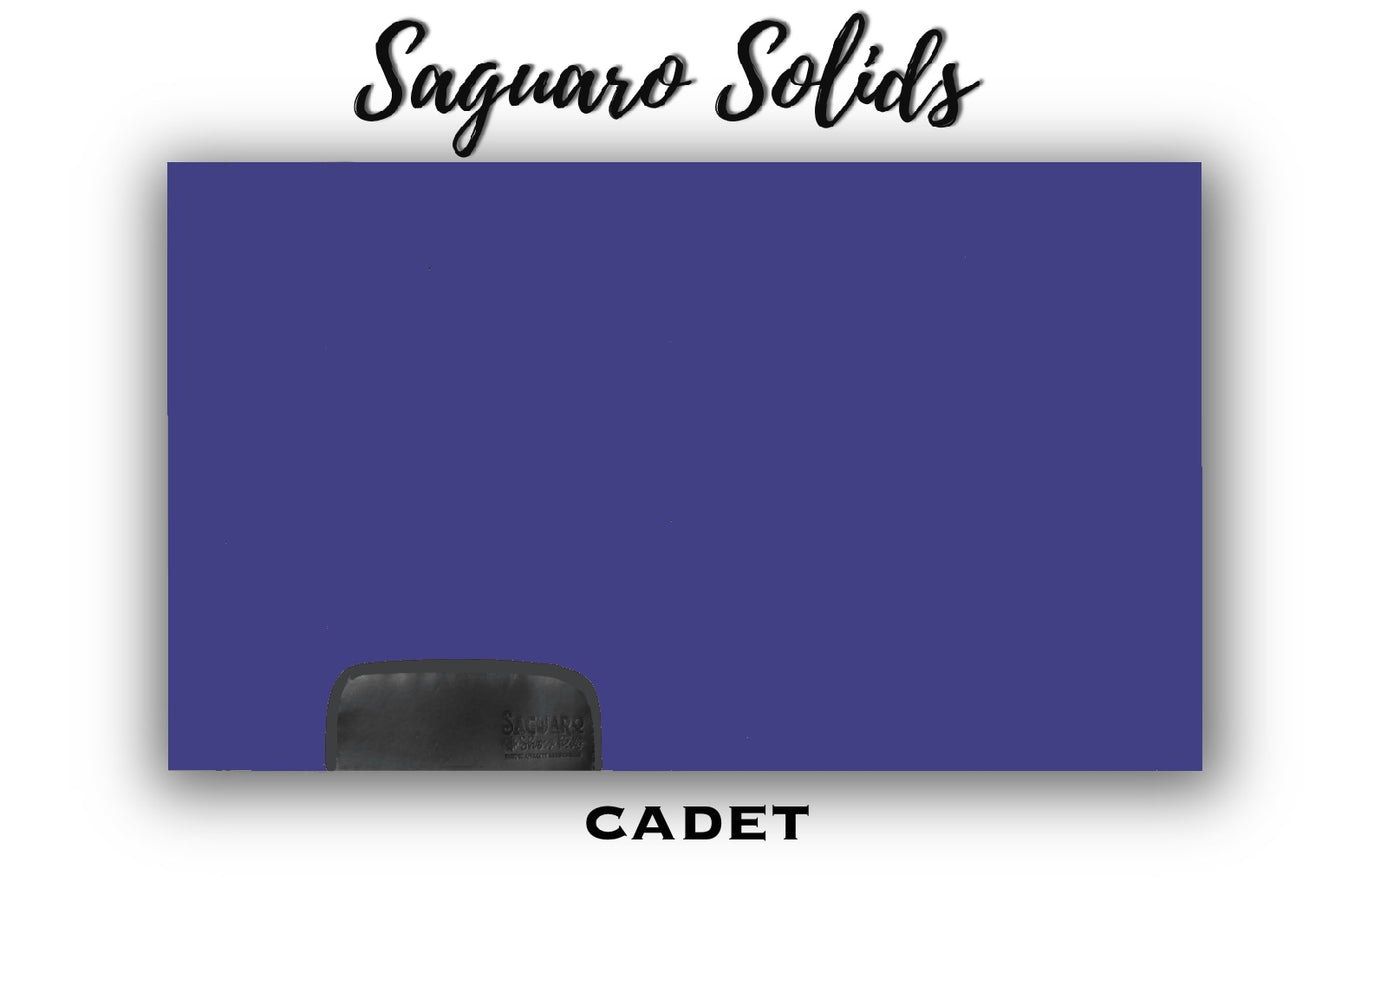 Saguaro Solid "Cadet" Show Pad (SEMI-CUSTOM)